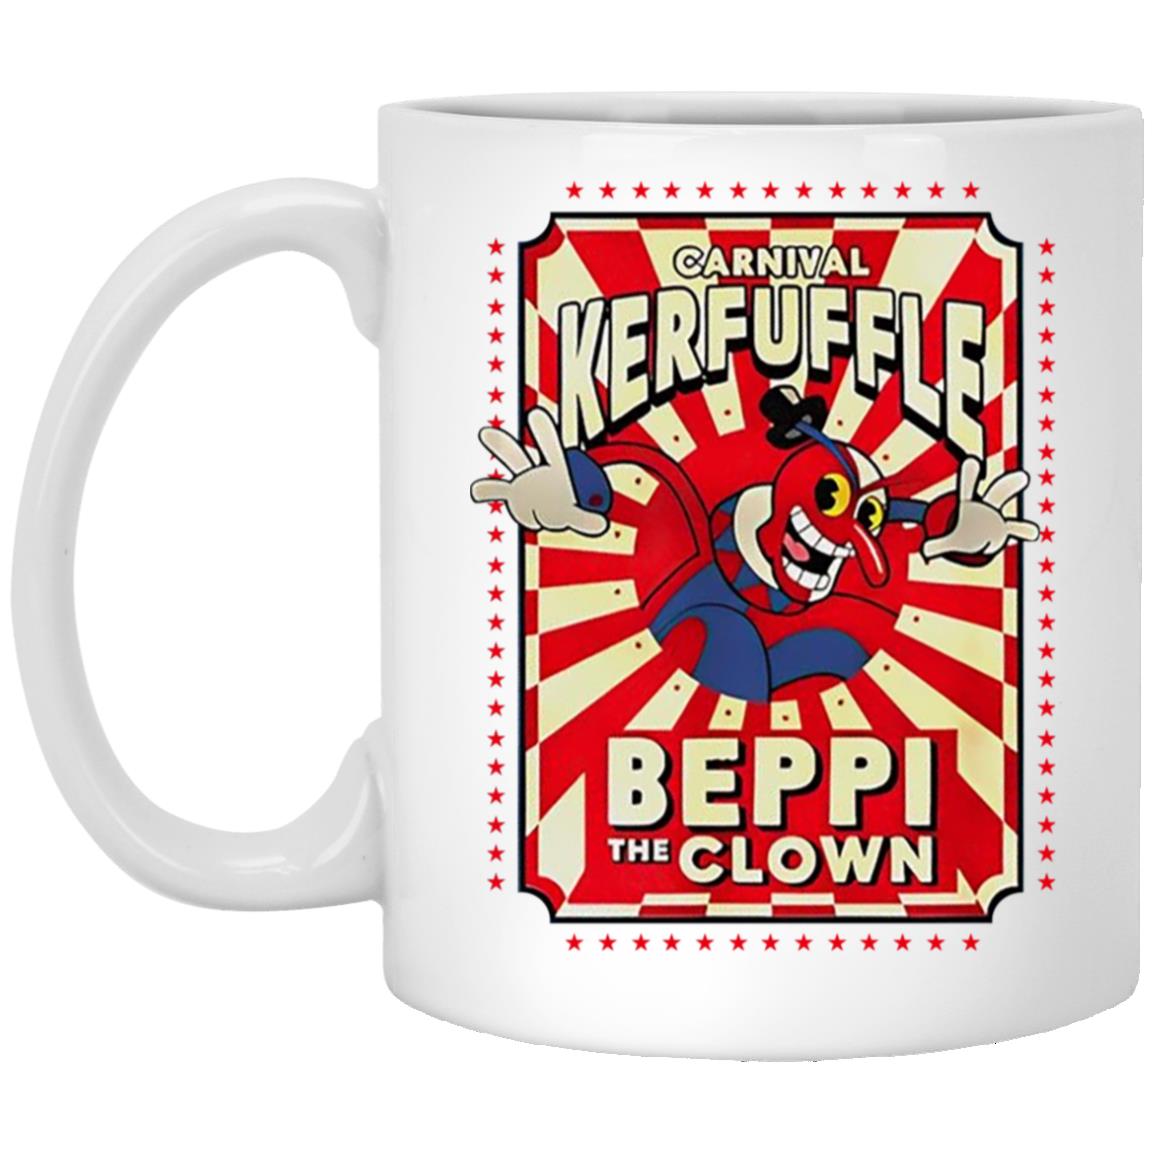 Cartoon Cuphead-Beppi The Clown Mermaid Enamel Brooch Pin Jacket Lapel  Metal Pins Brooches Badges Exquisite